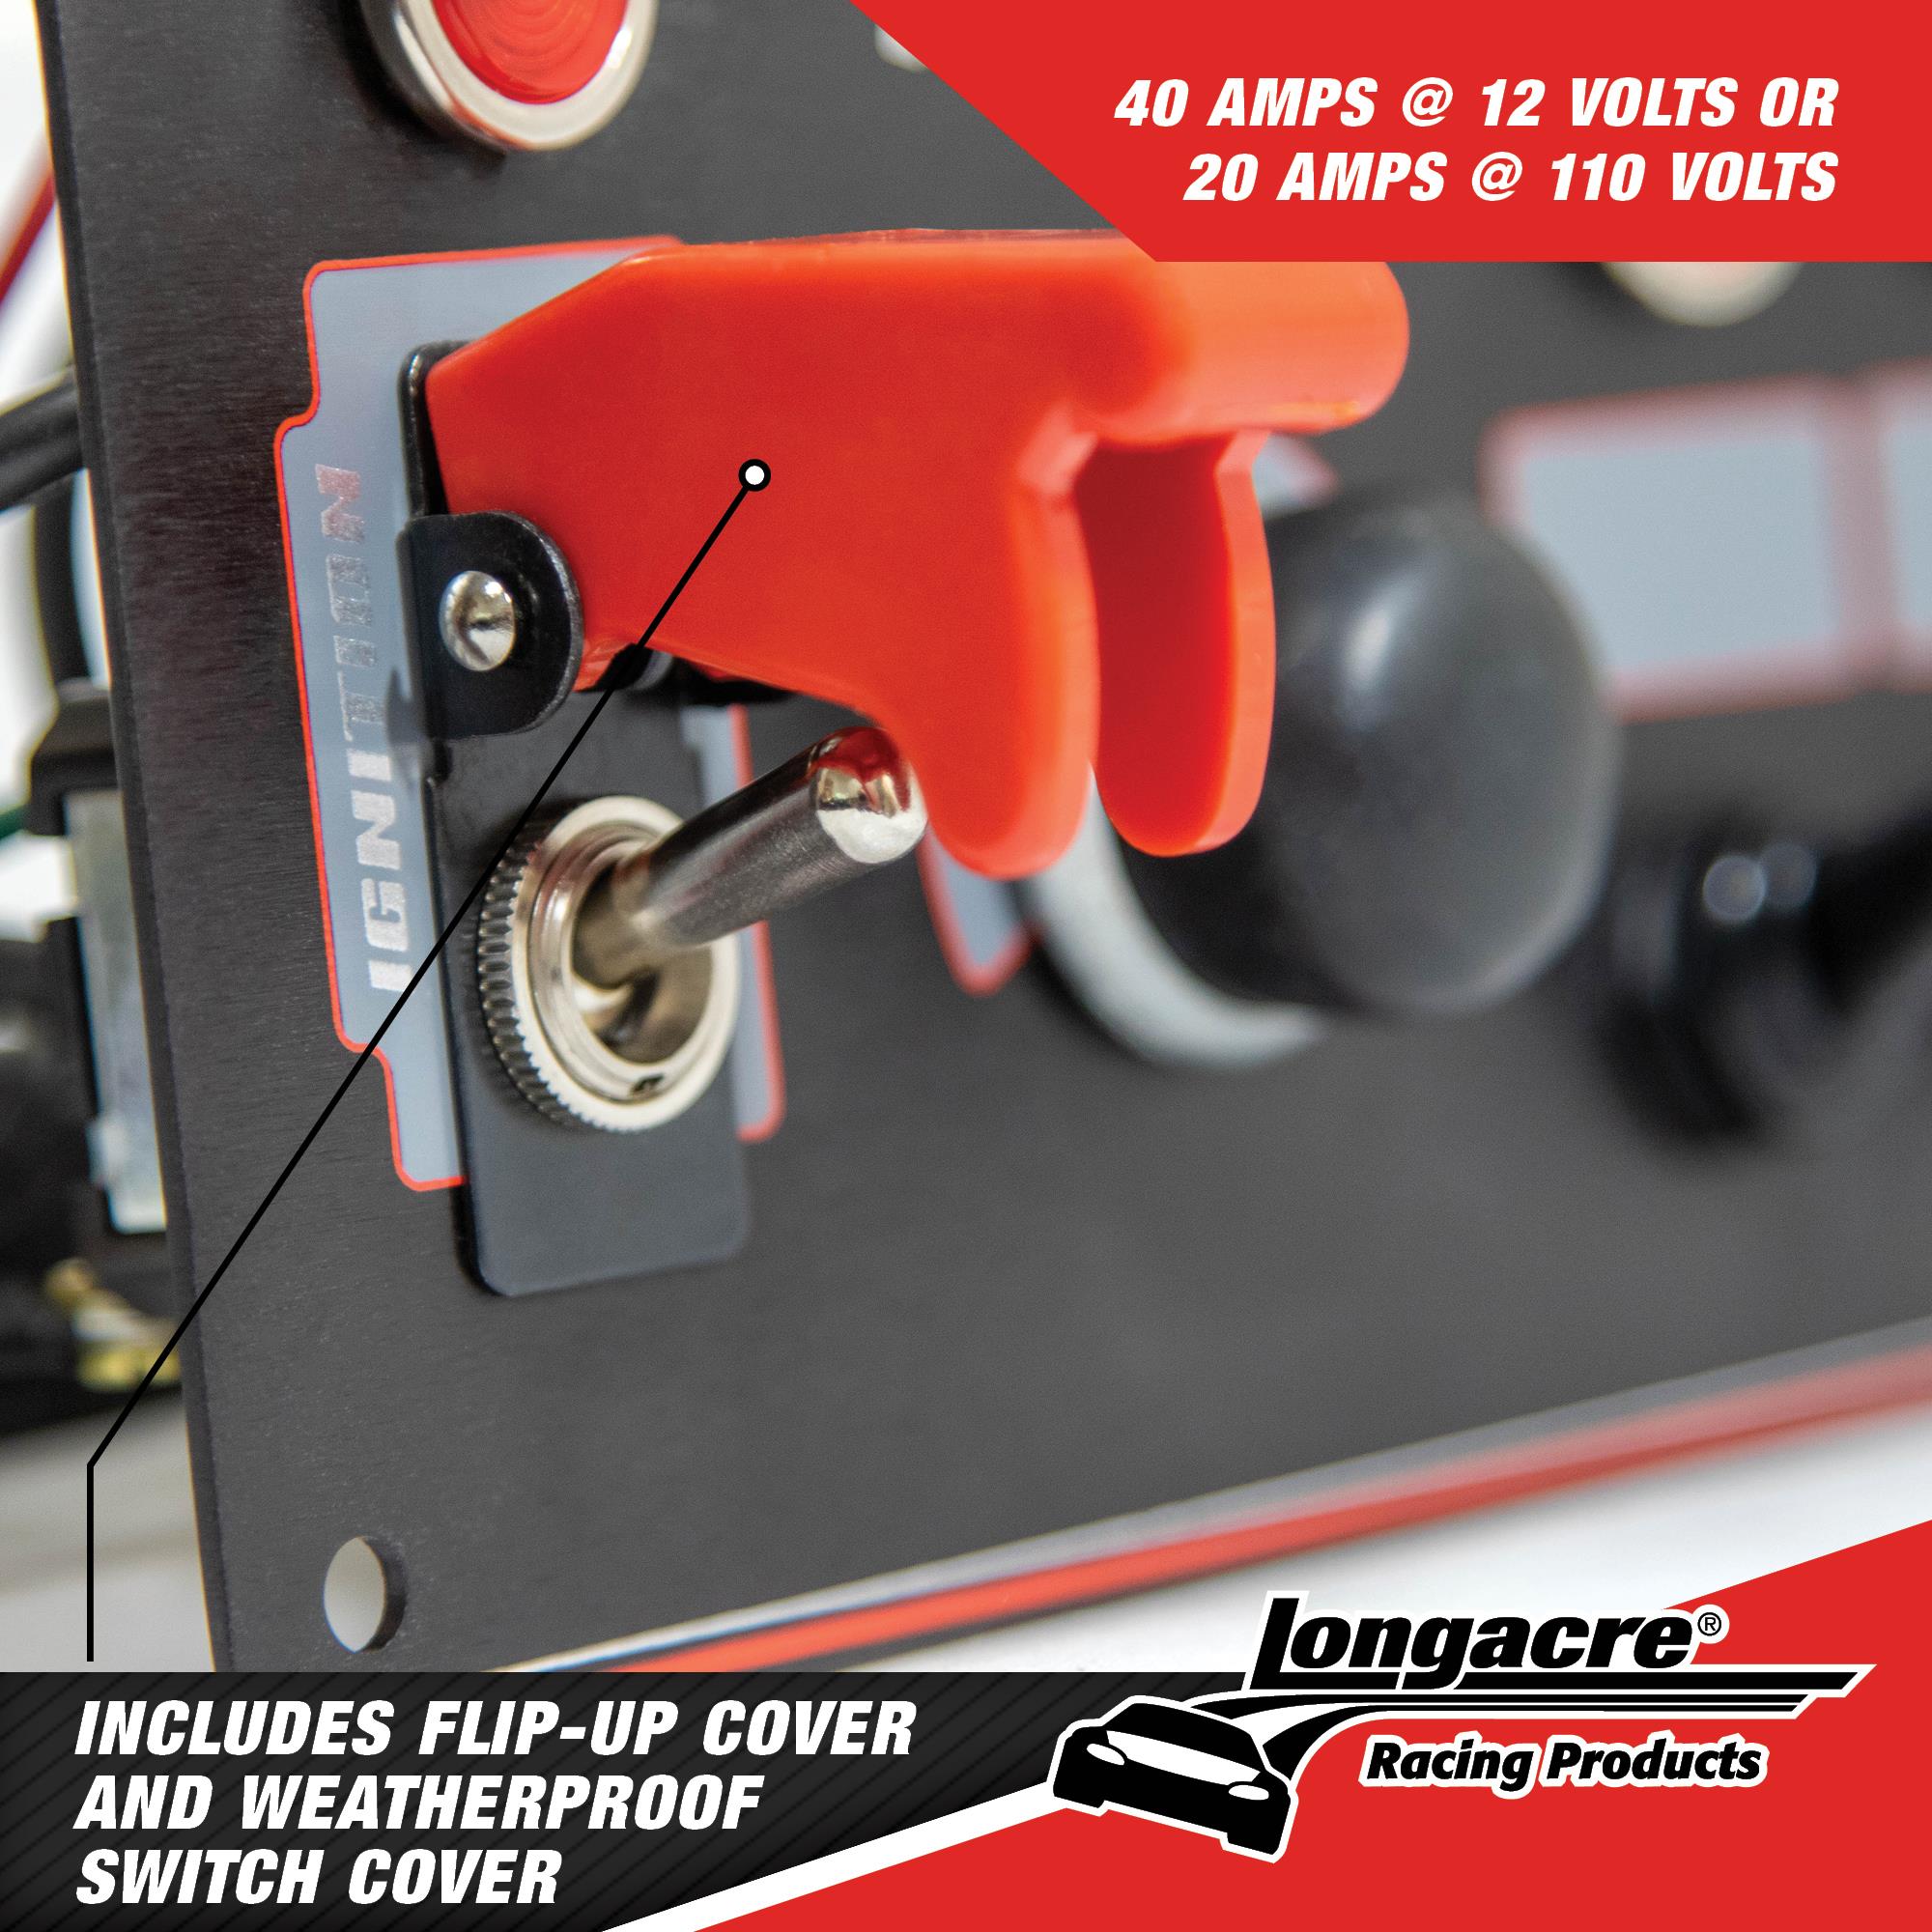 Flip-up Start / Ignition panel w/ 4 acc & pilot lights